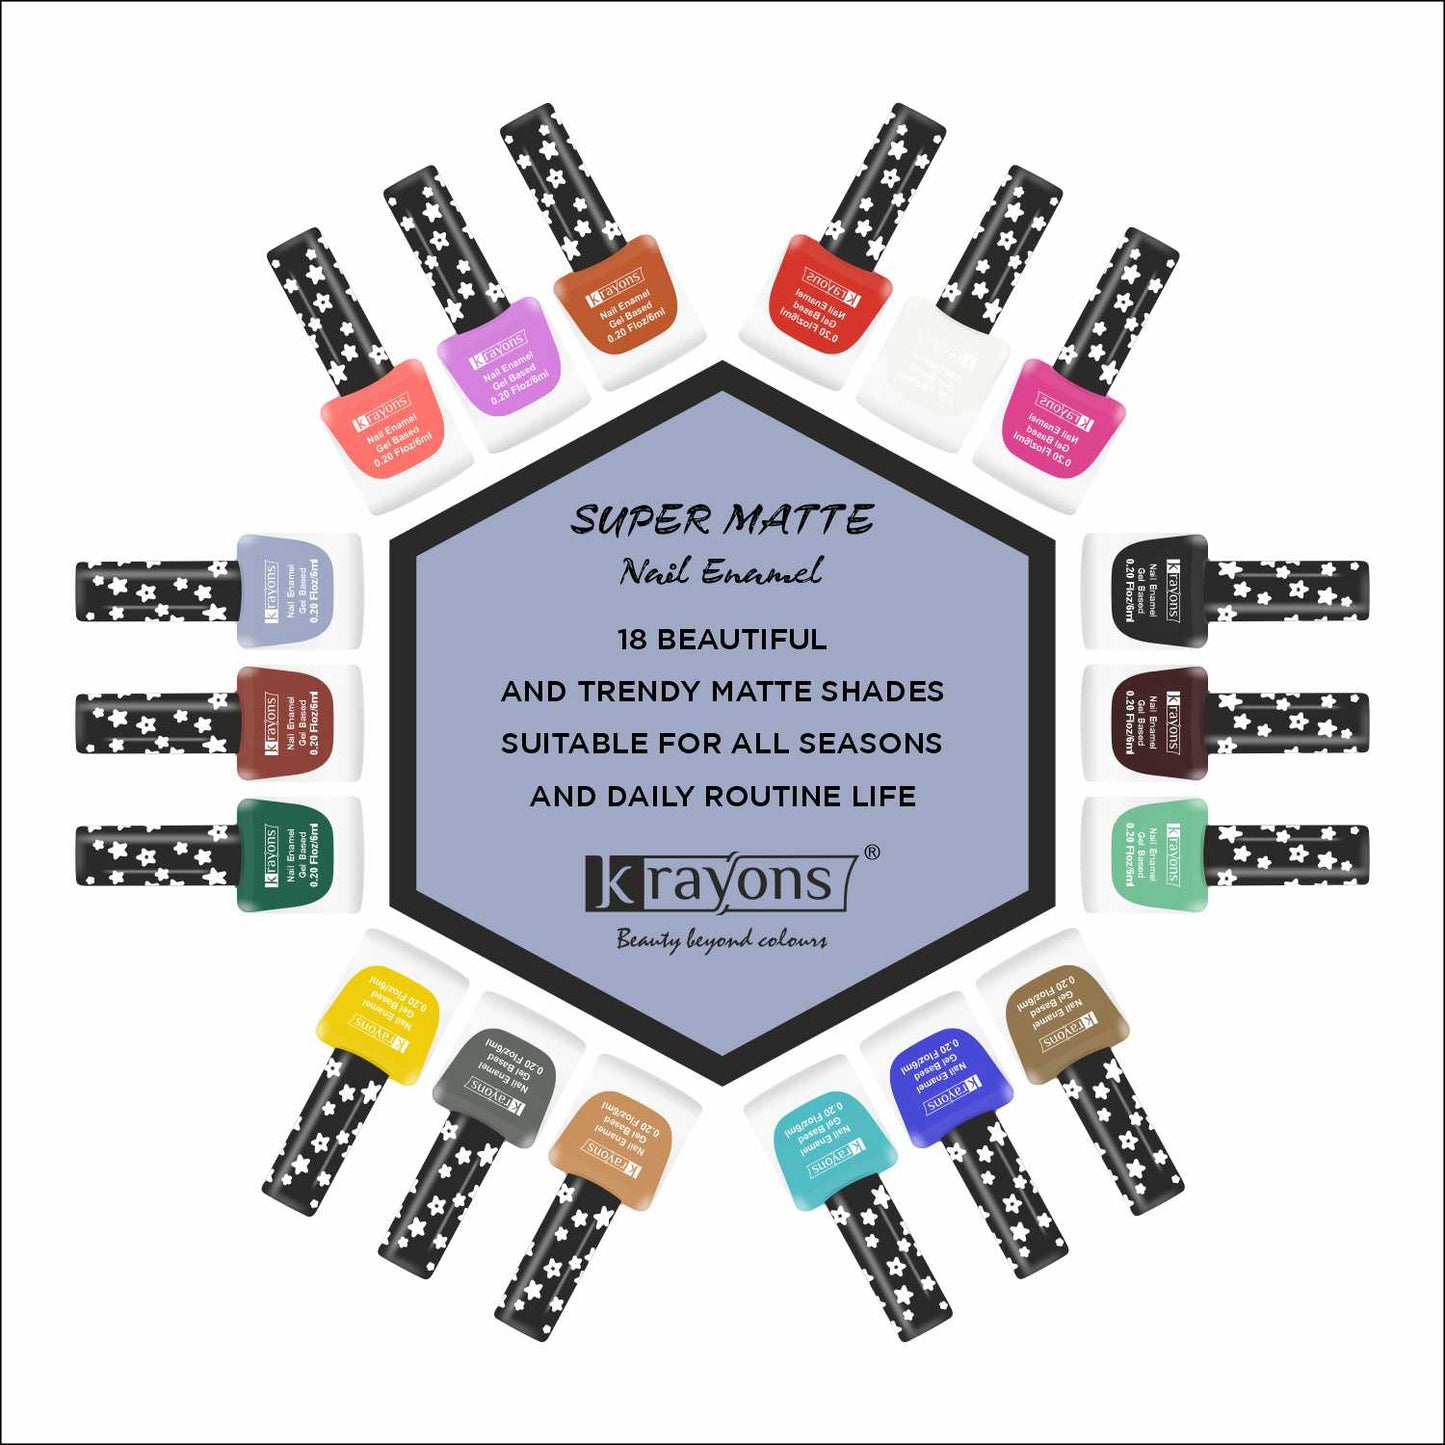 Krayons Cute Super Matte Finish Nail Enamel, Quick Dry, LongLasting, Blossom Peach, Plum Matte, Black Magnet, 6ml Each (Pack of 3)